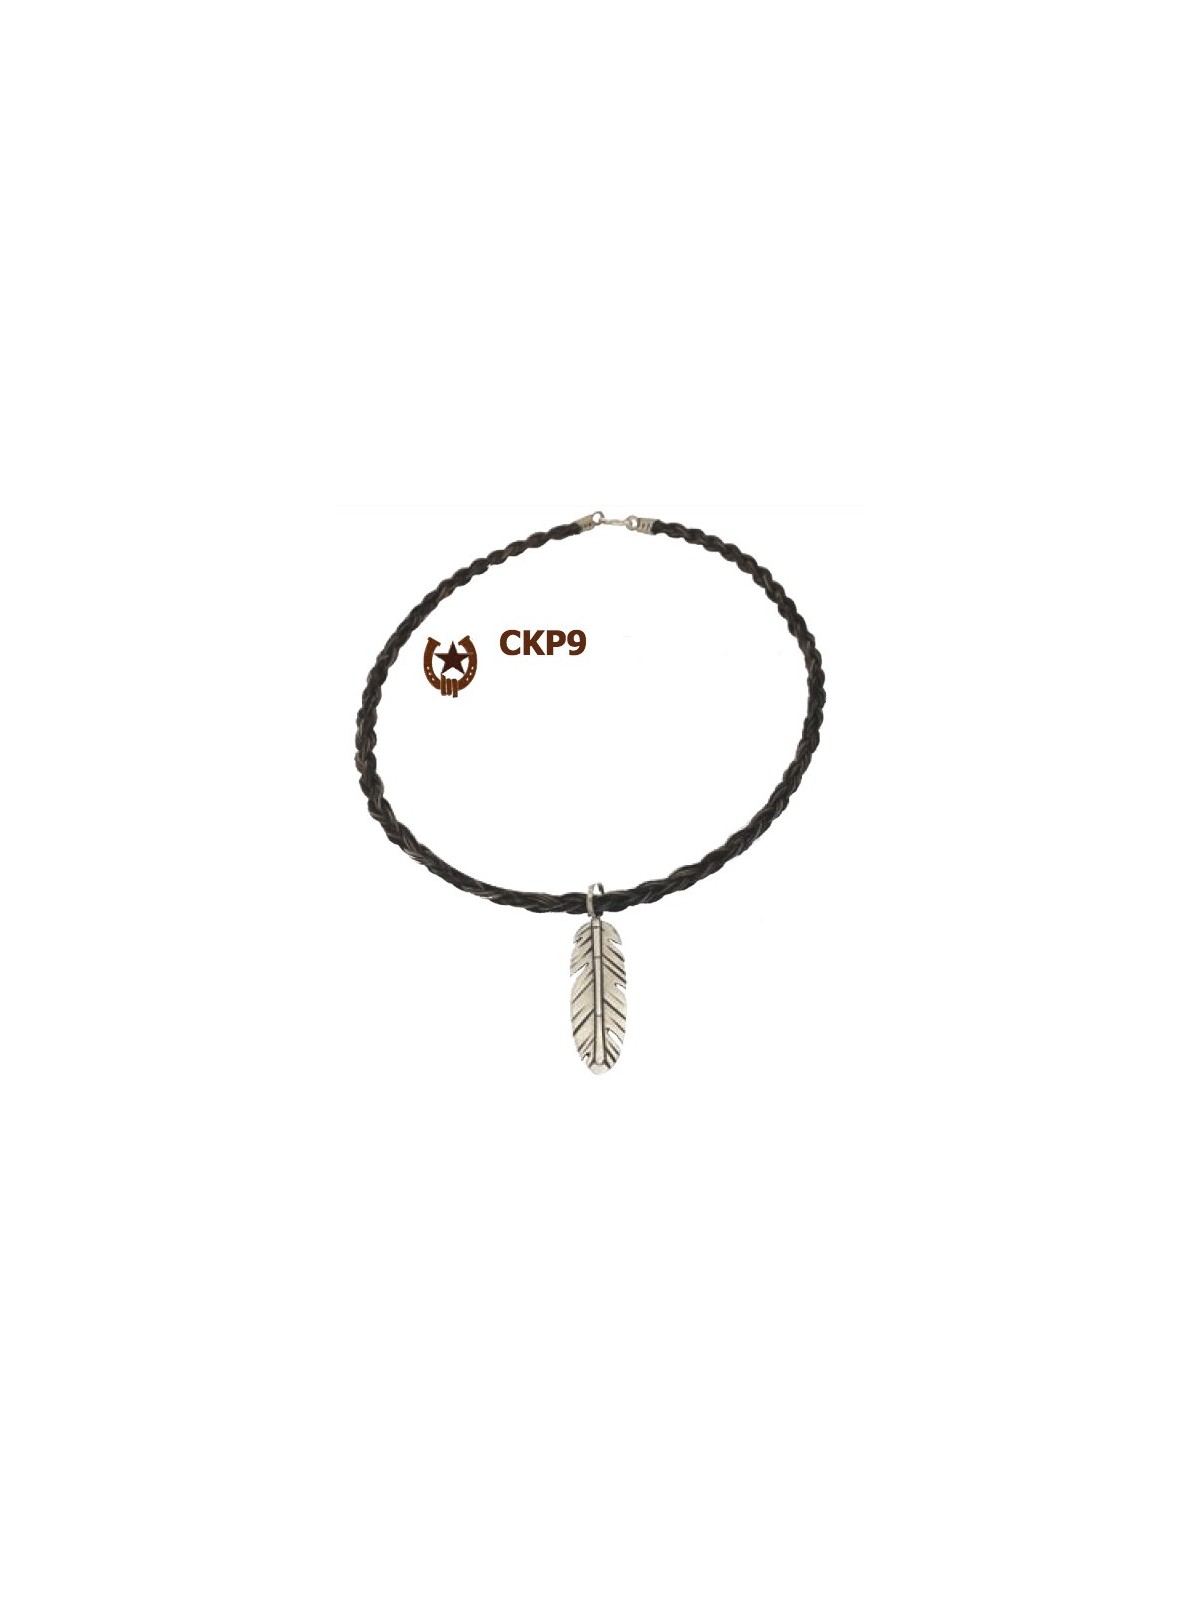 Necklace CKP9